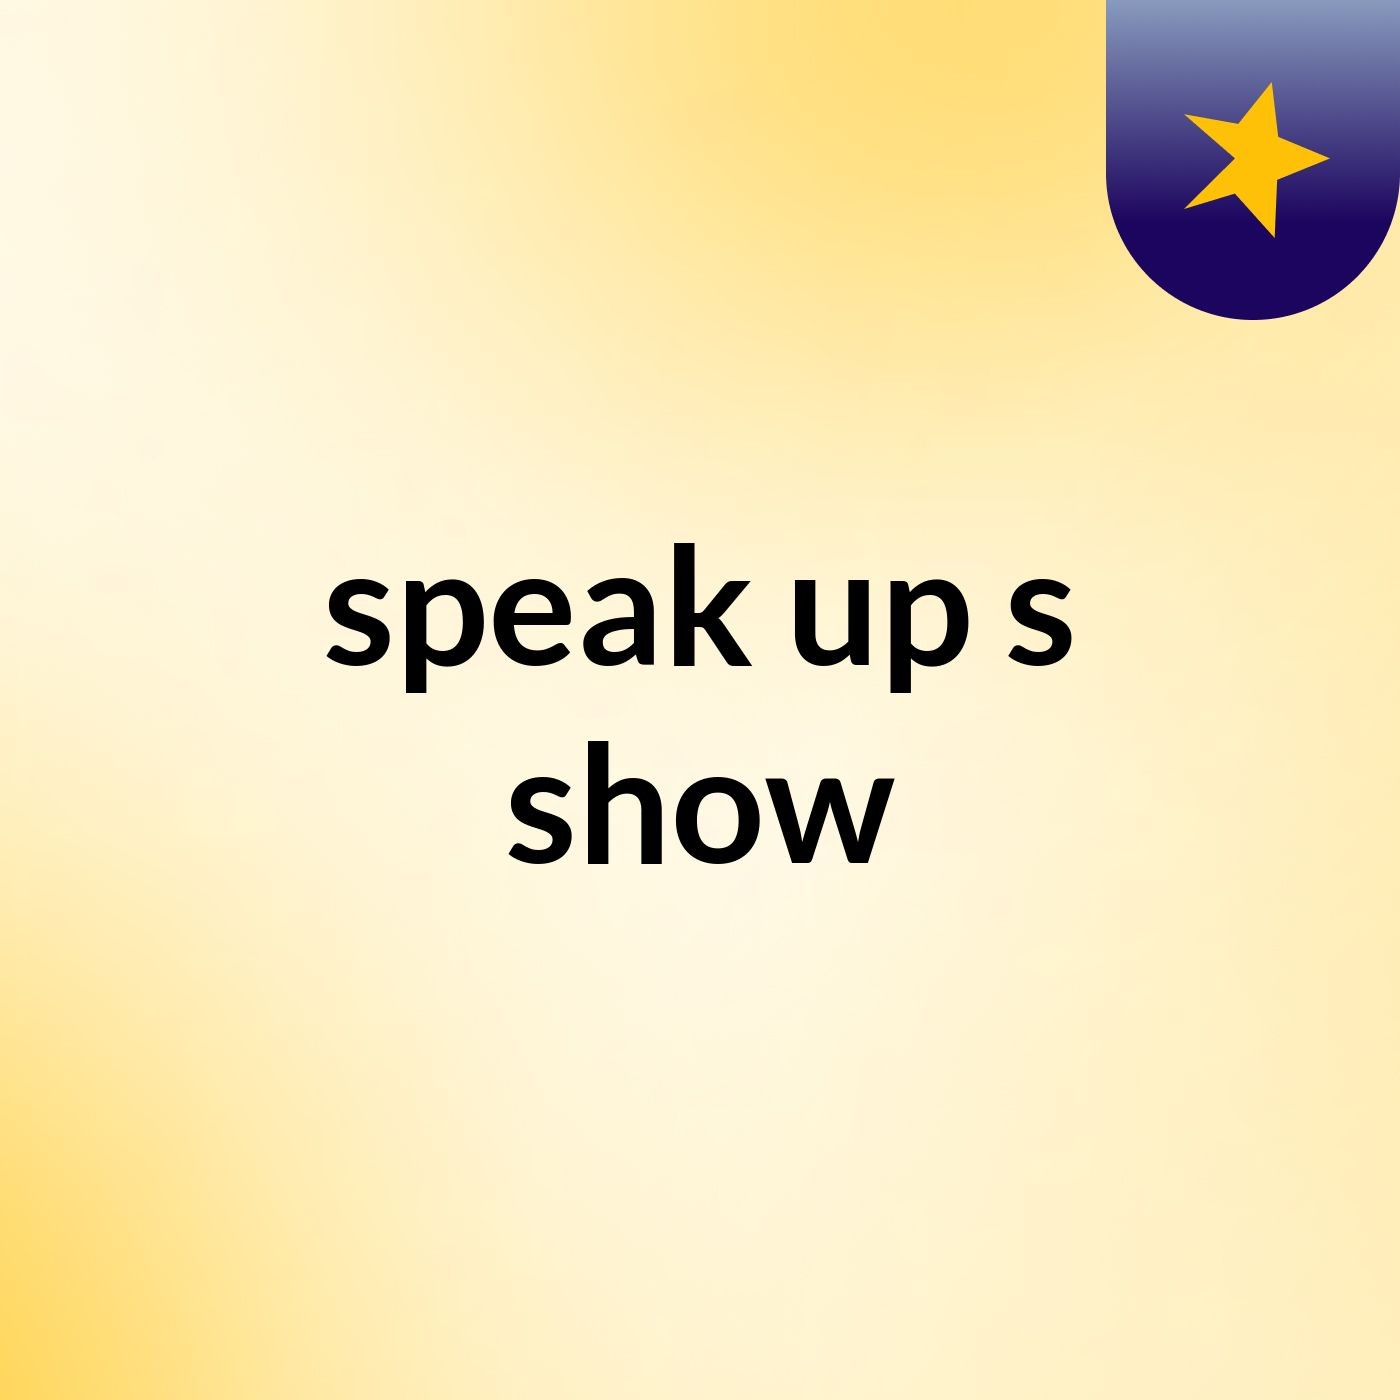 speak up's show